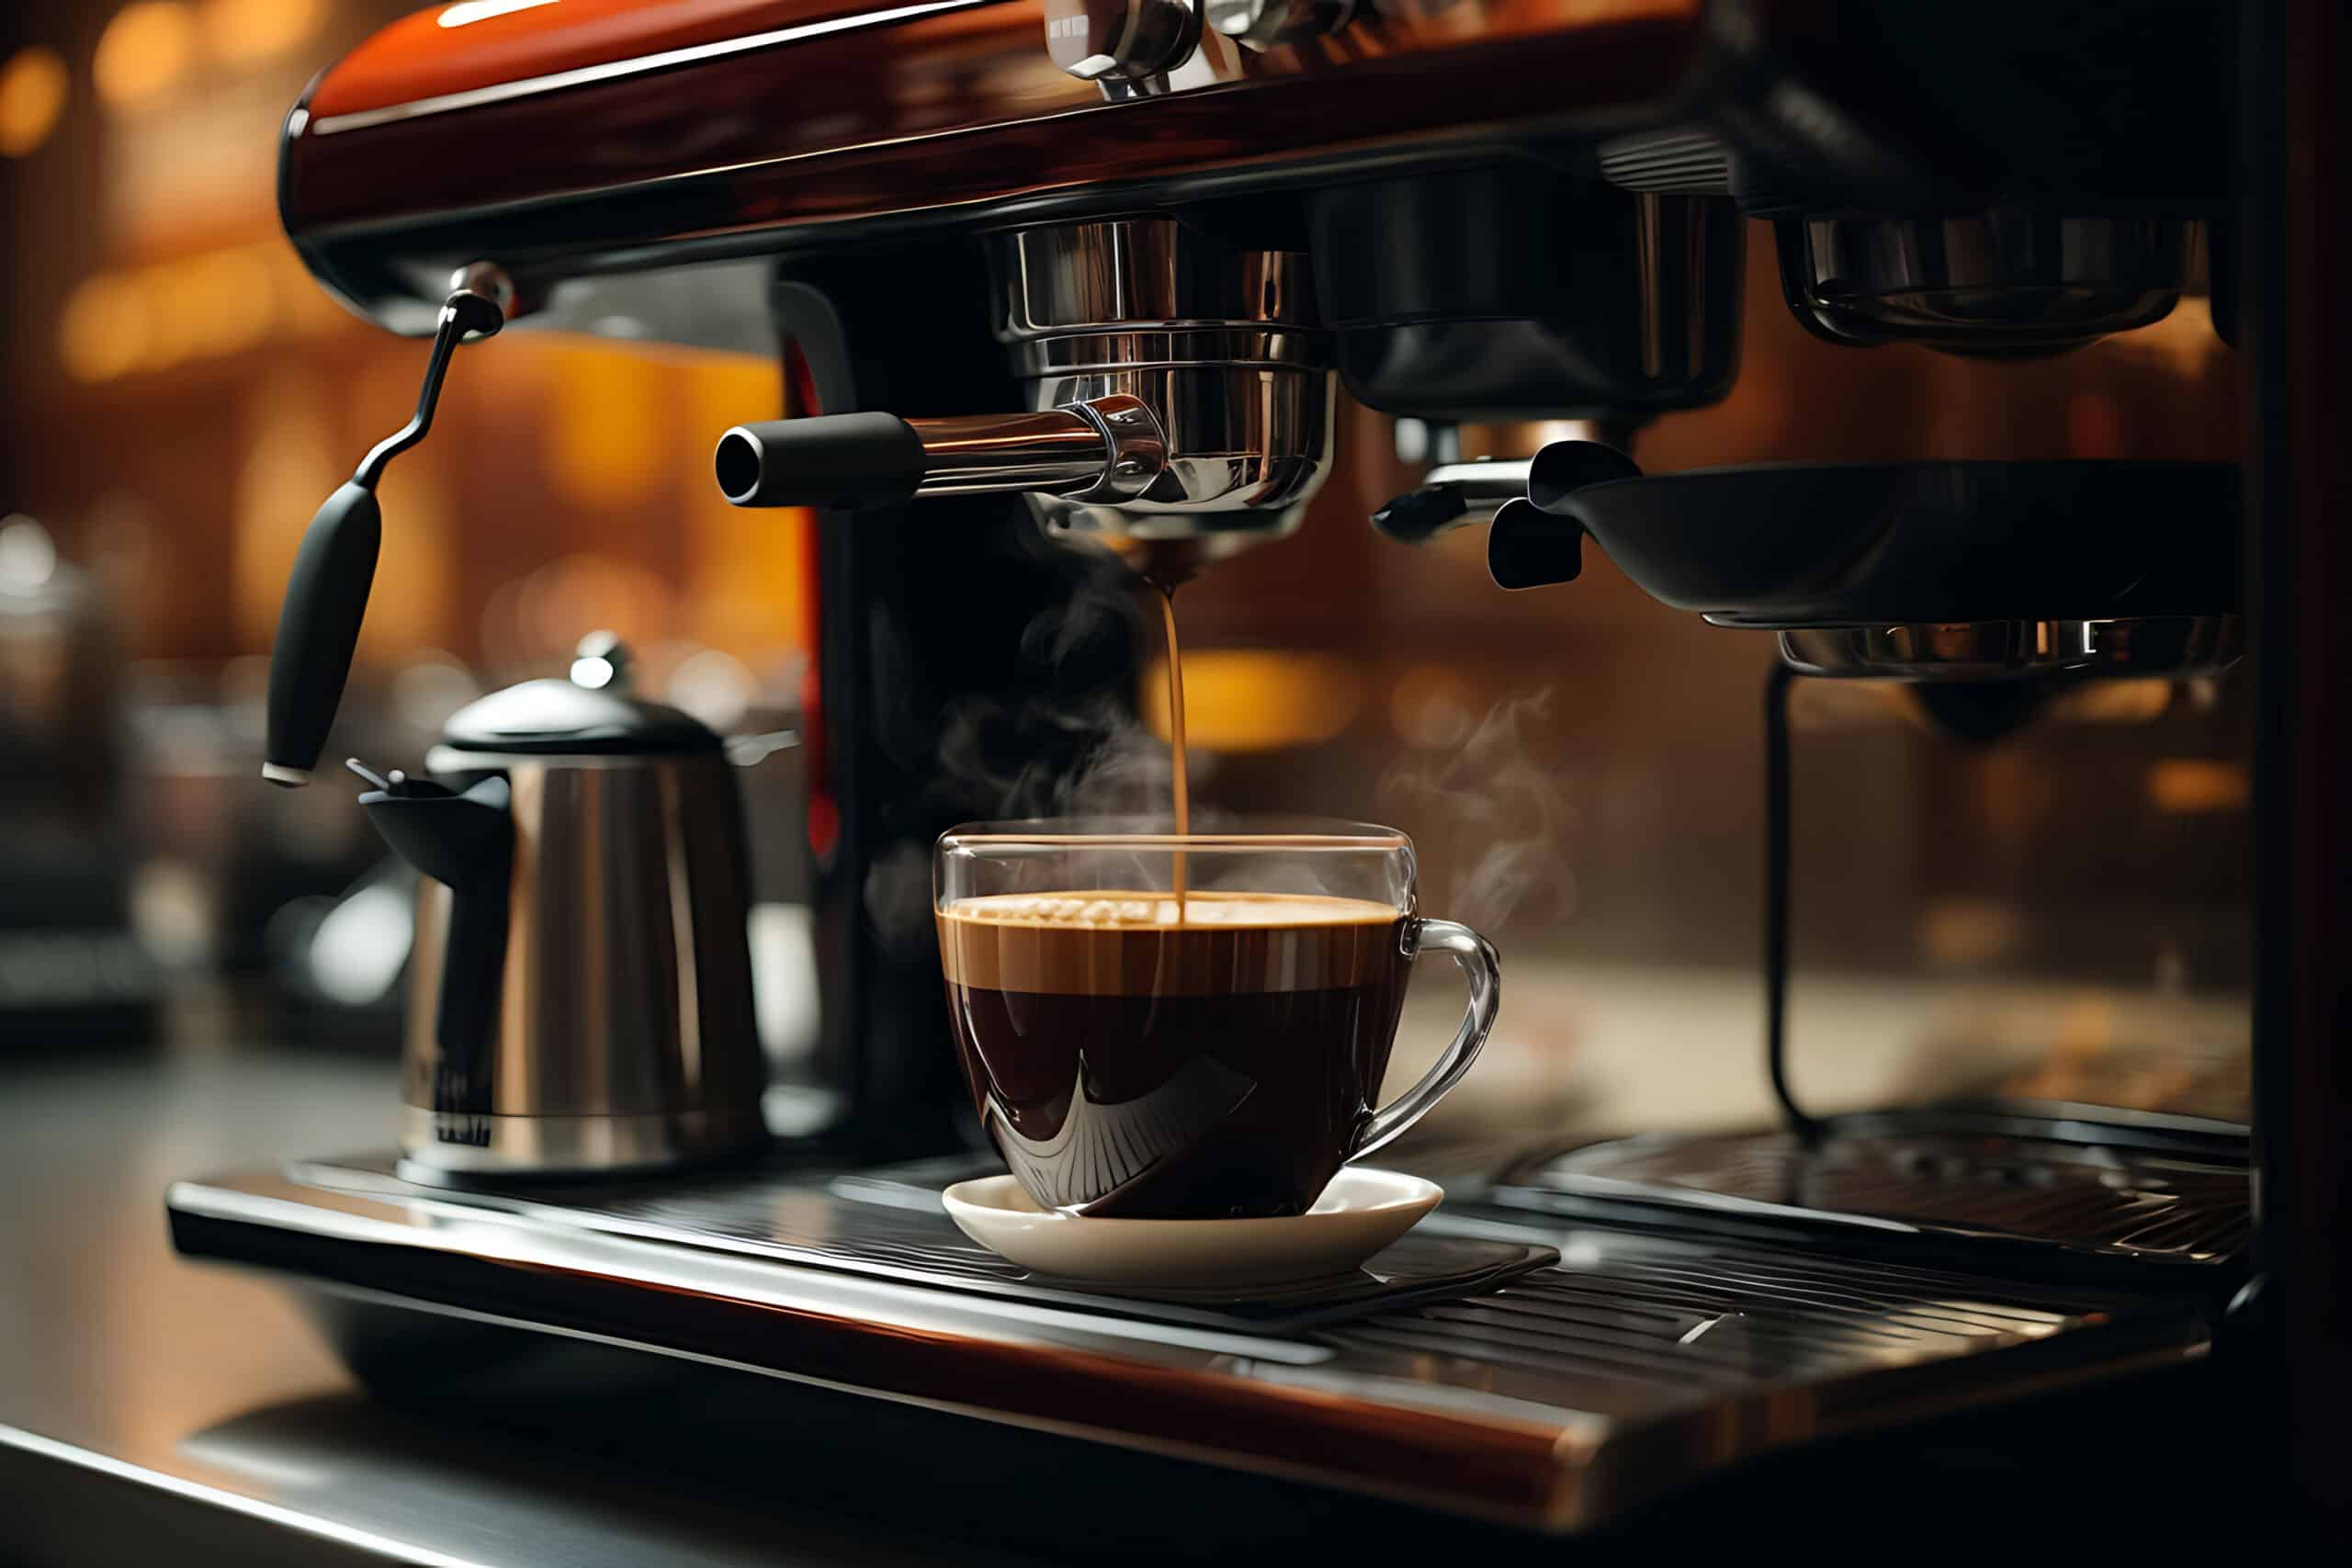 www.appr.com : Can Ground Coffee Be Used In Espresso Machine?